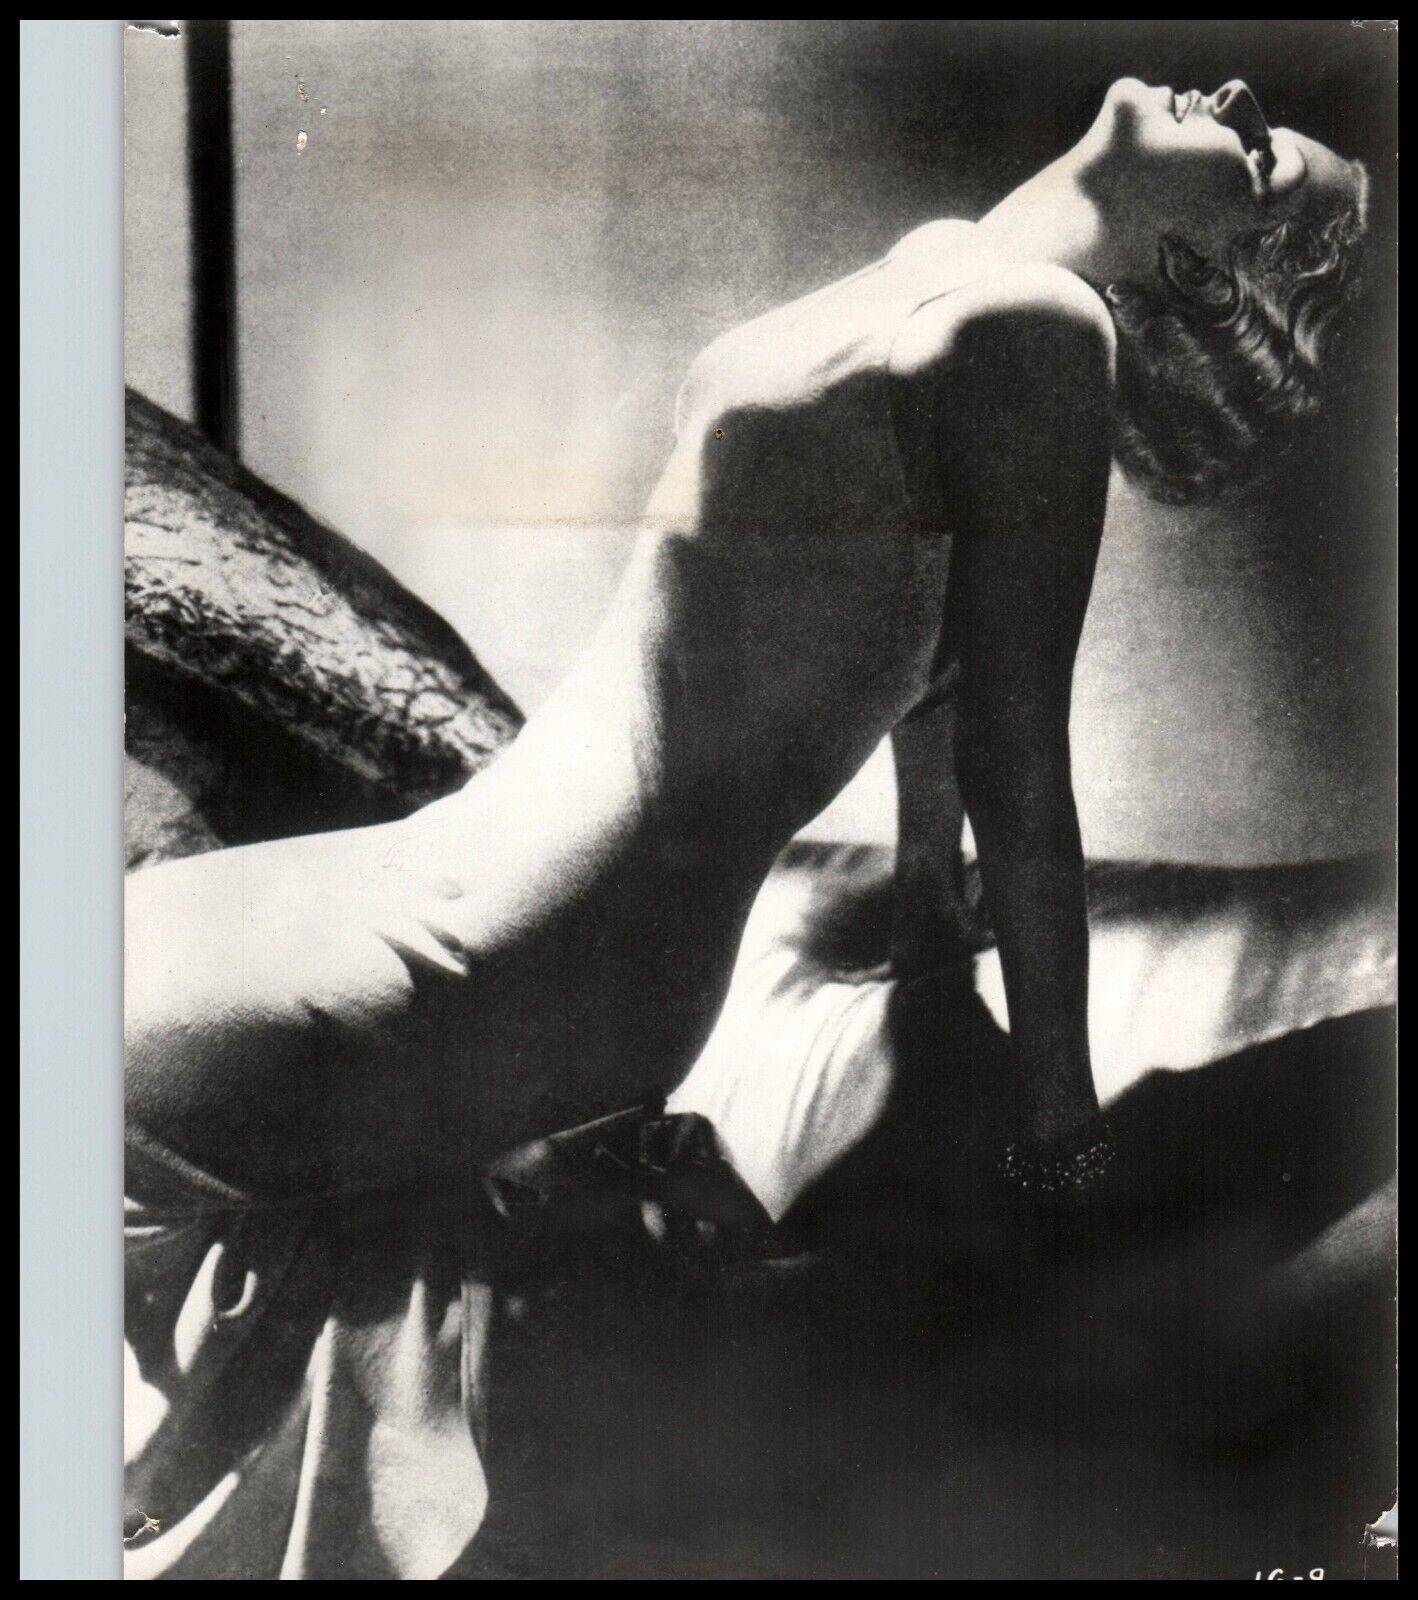 JEAN HARLOW SEDUCTIVE POSE LOVE GODDESSES 1940s STUNNING PORTRAIT ORIG PHOTO 632